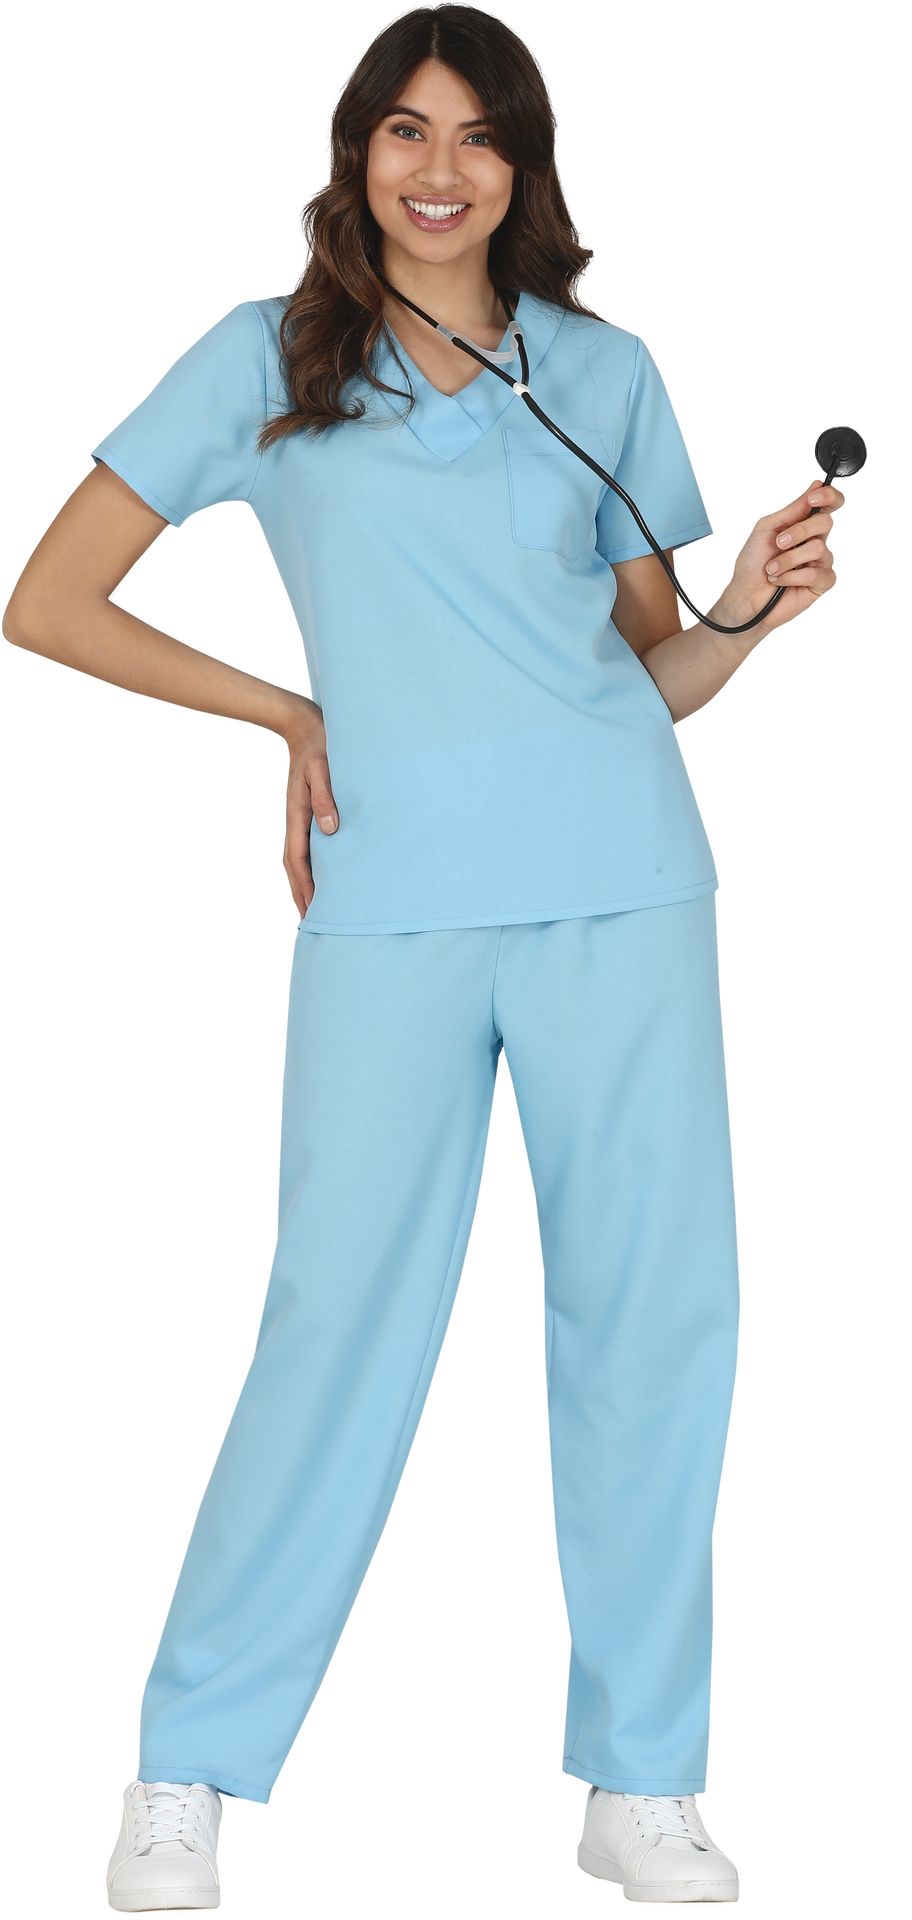 Verpleegkundige Blauw outfit dames